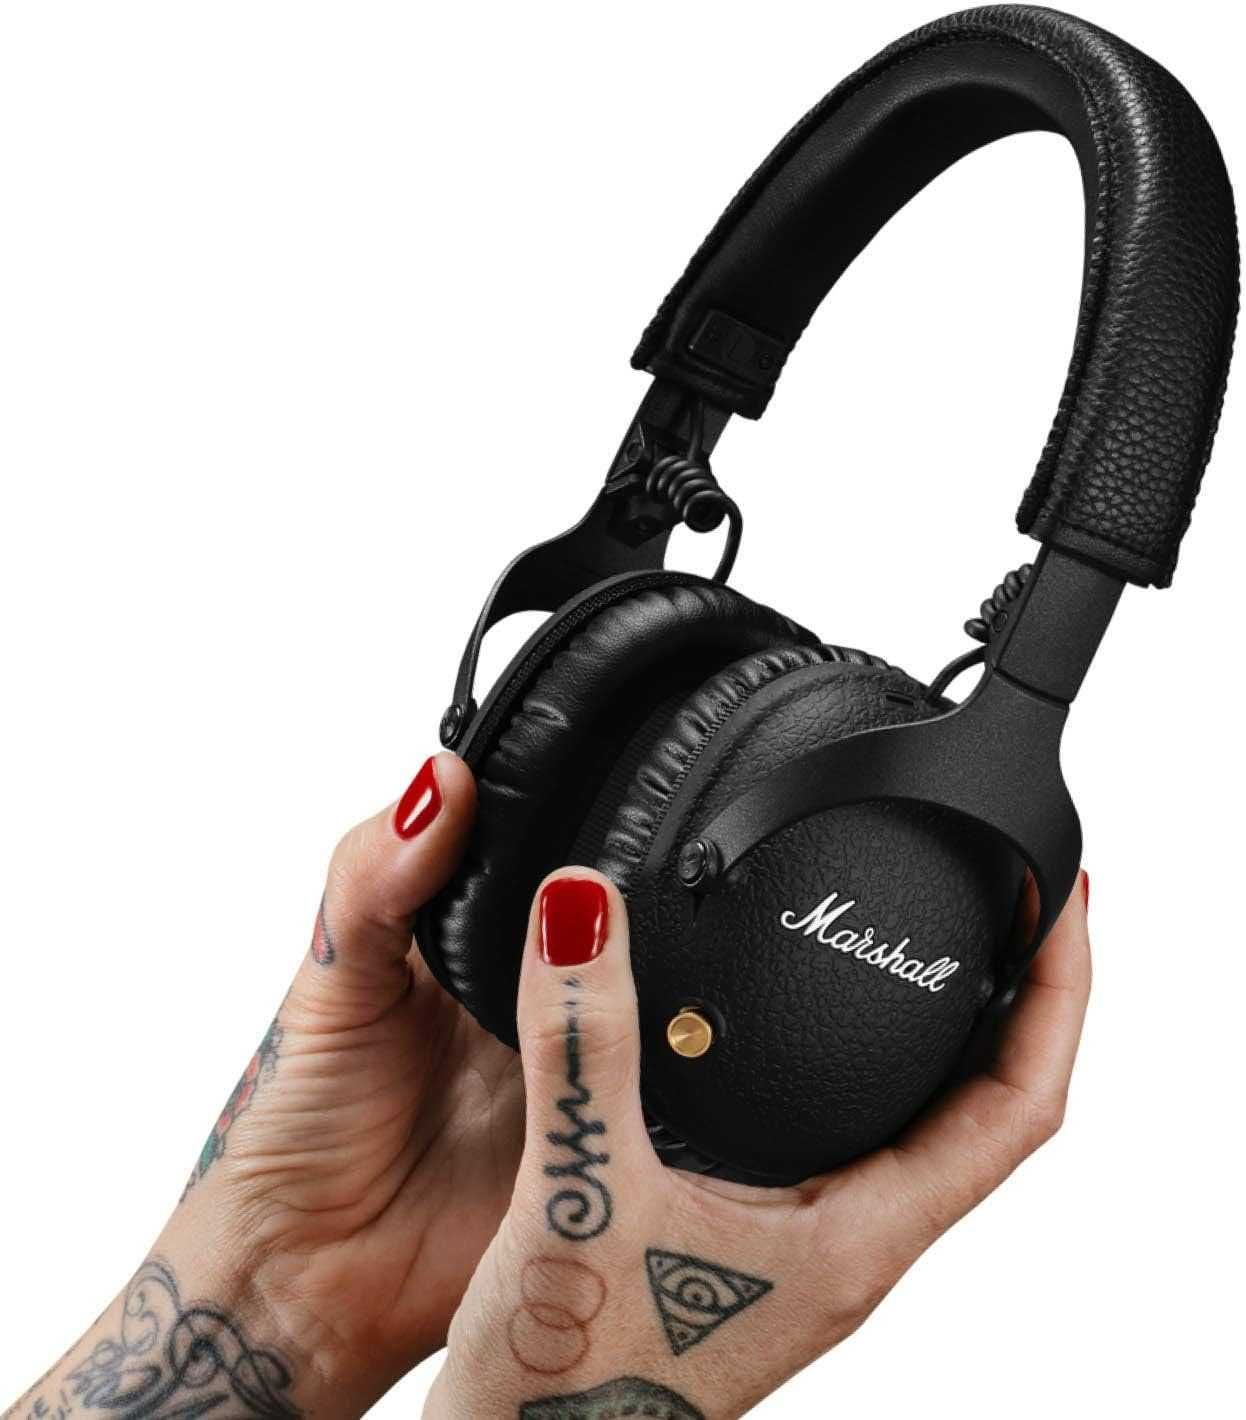 Marshall Monitor II ANC Over-Ear Bluetooth Headphone